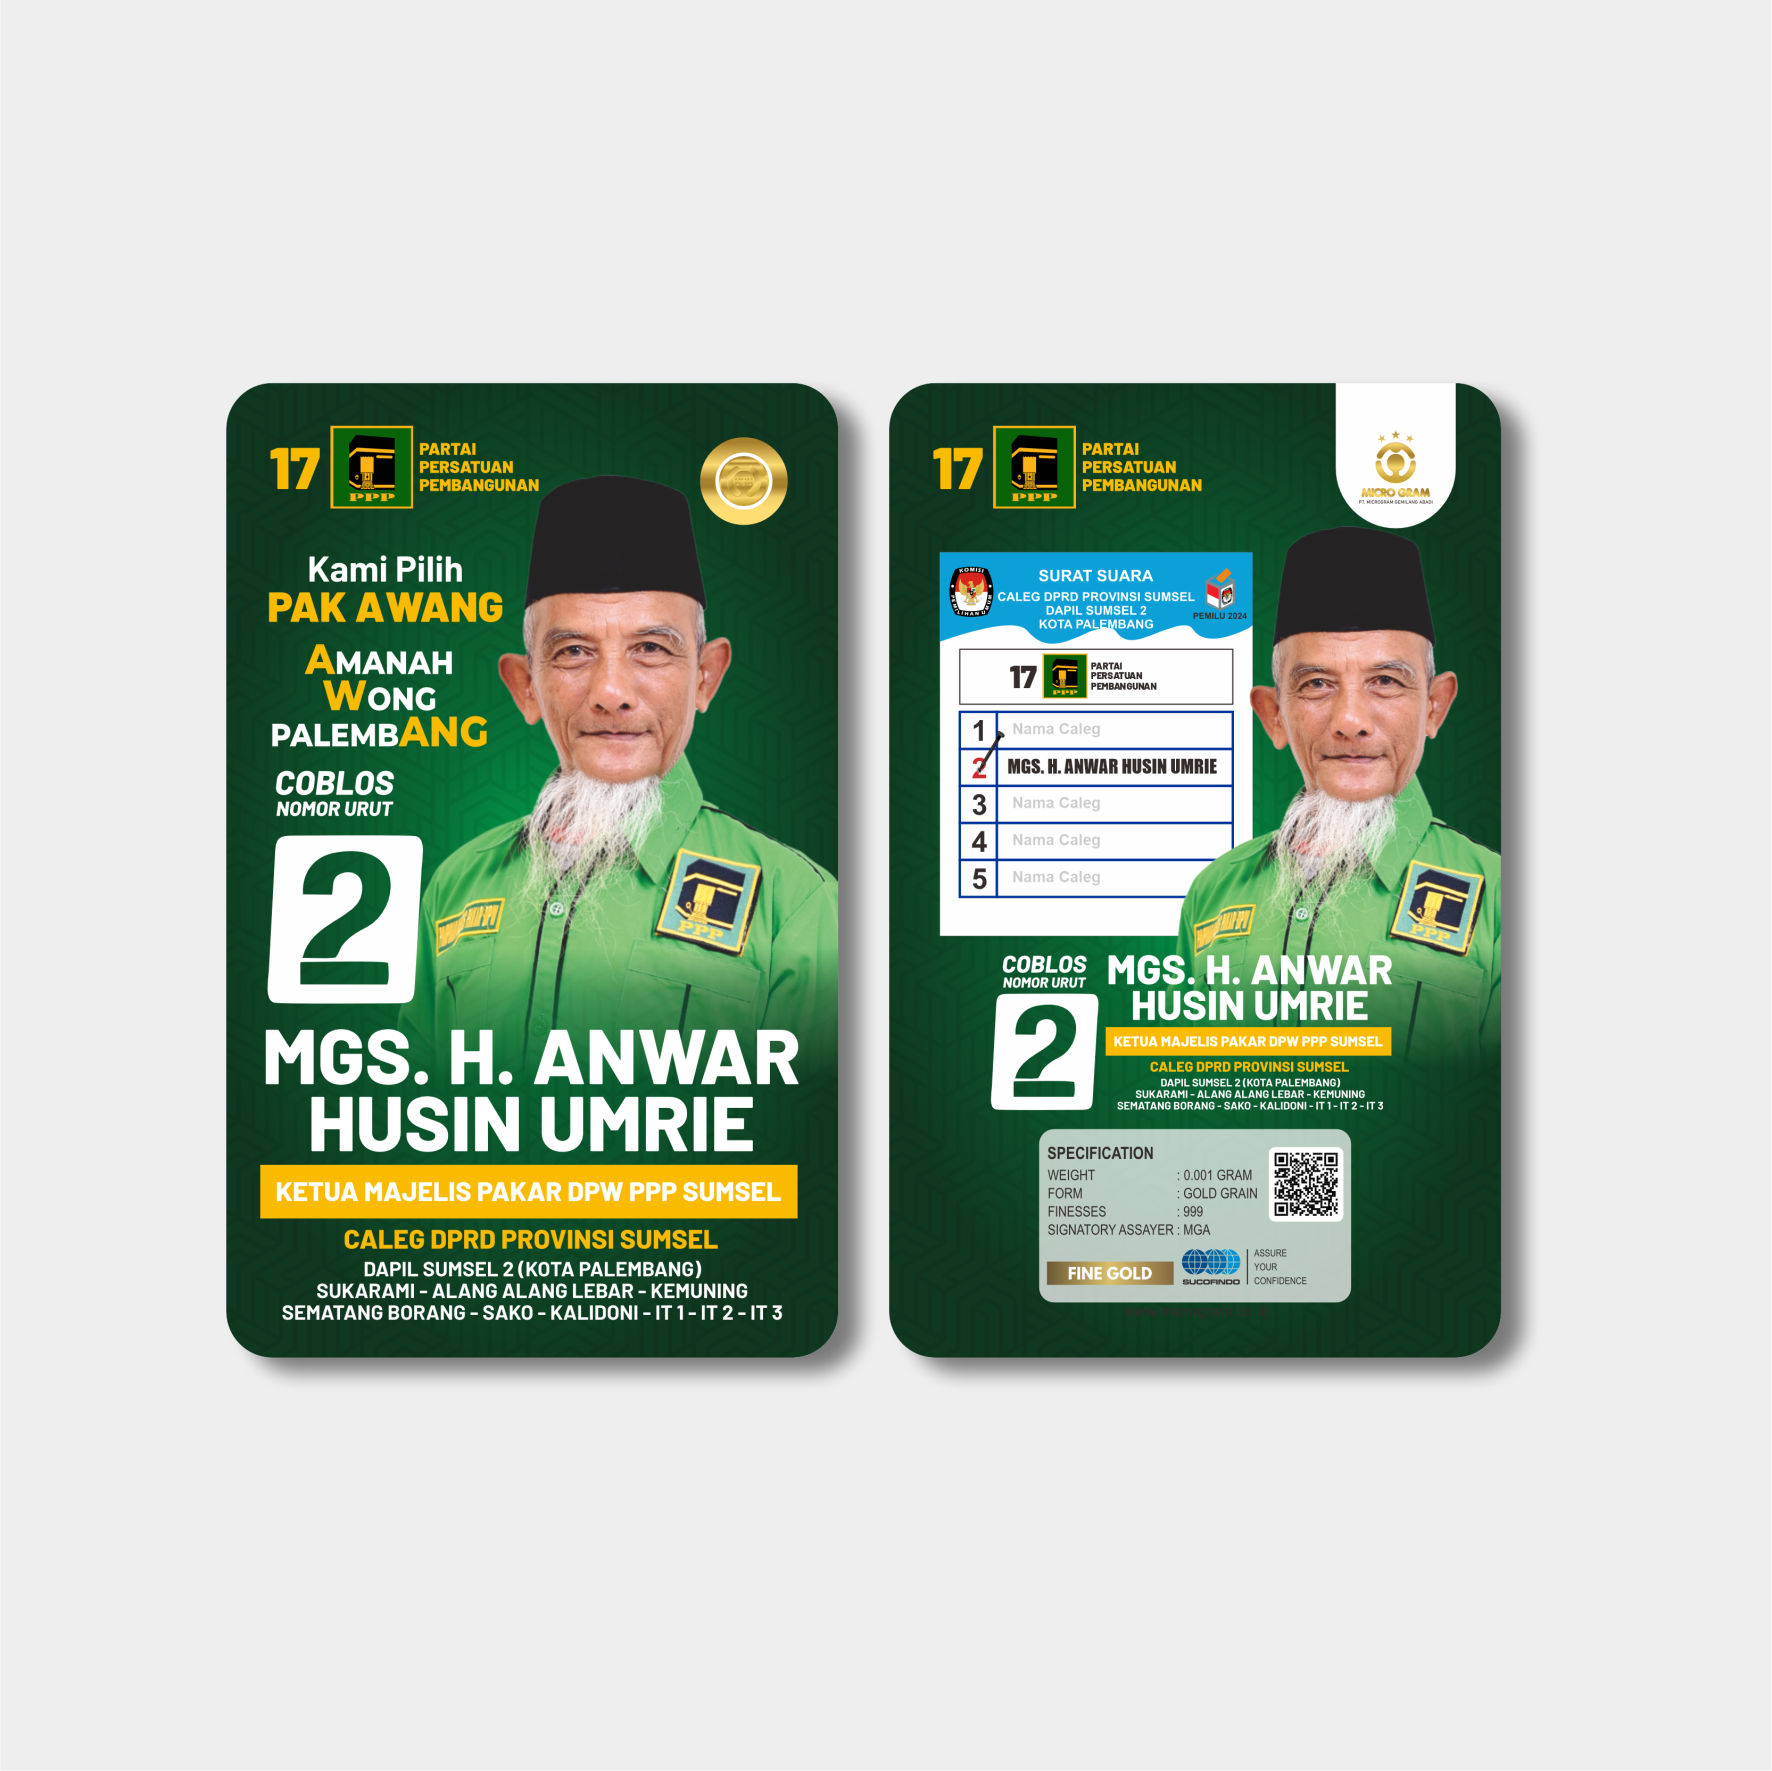 P3 Anwar Husin Umrie 0.001